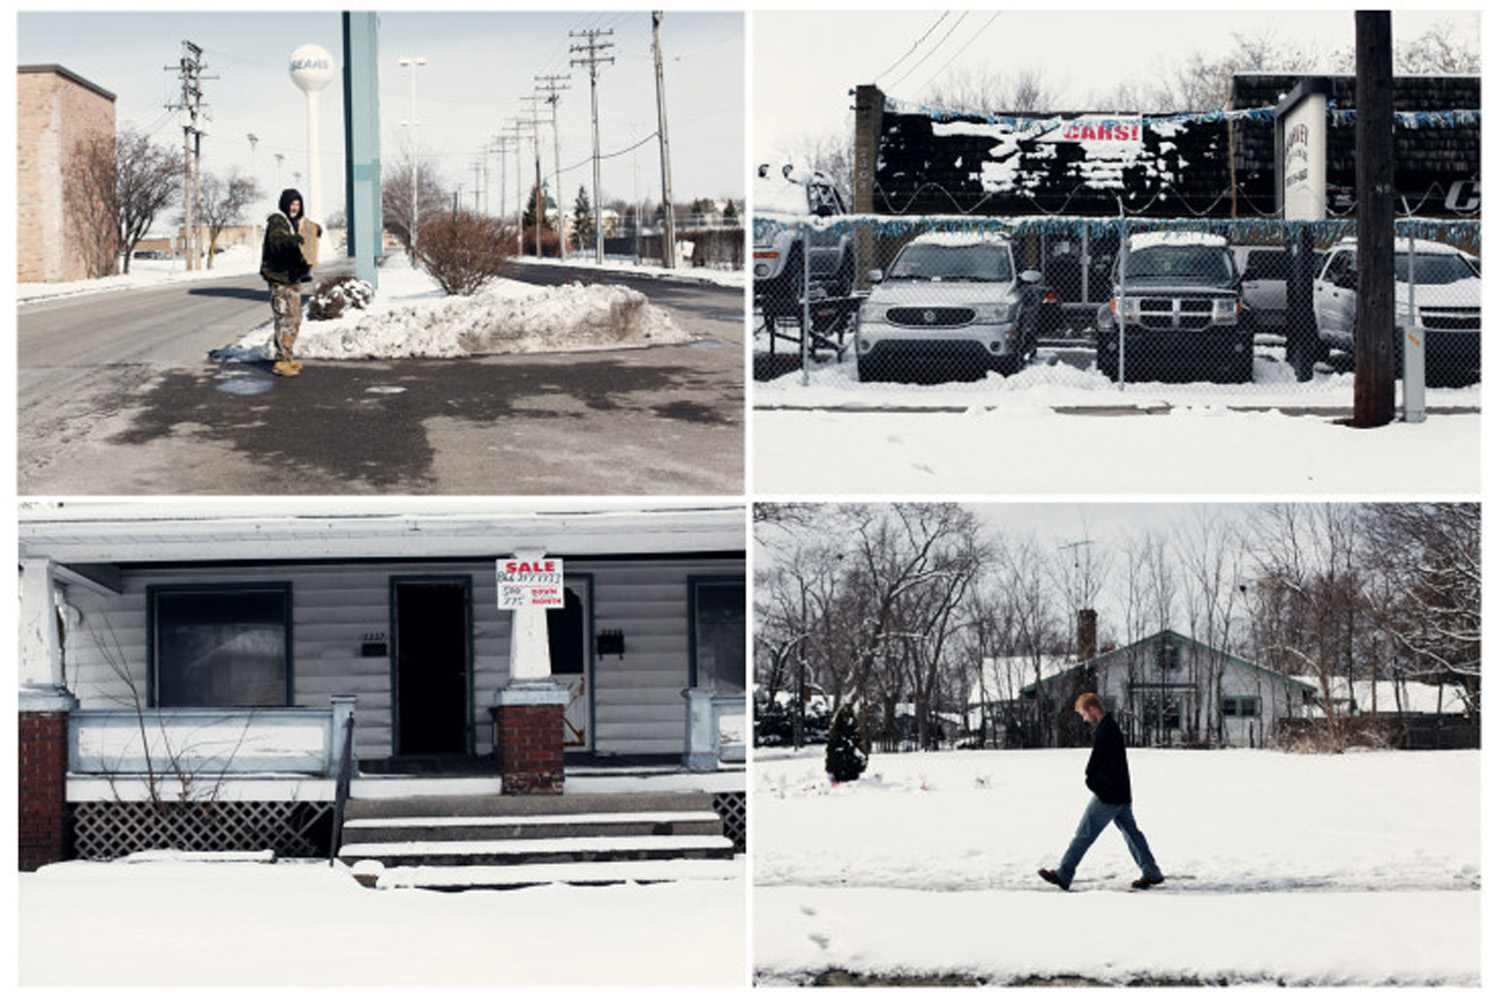 Image: Street scenes from Flint, Mich. February 2012.